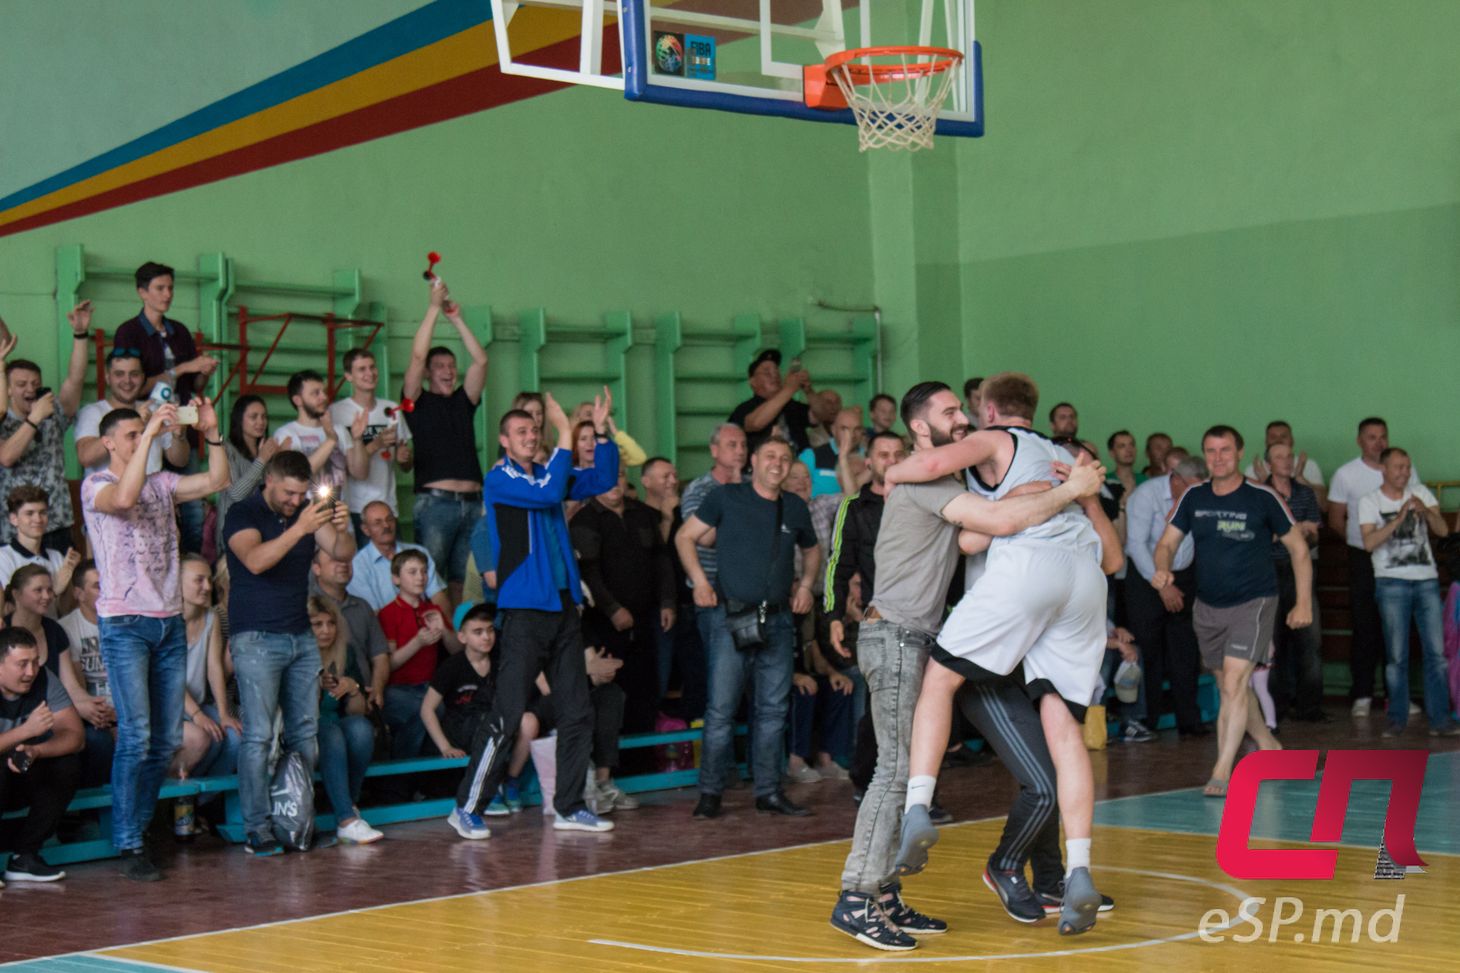 Бельцкий БК Баско - чемпион Молдовы по баскетболу